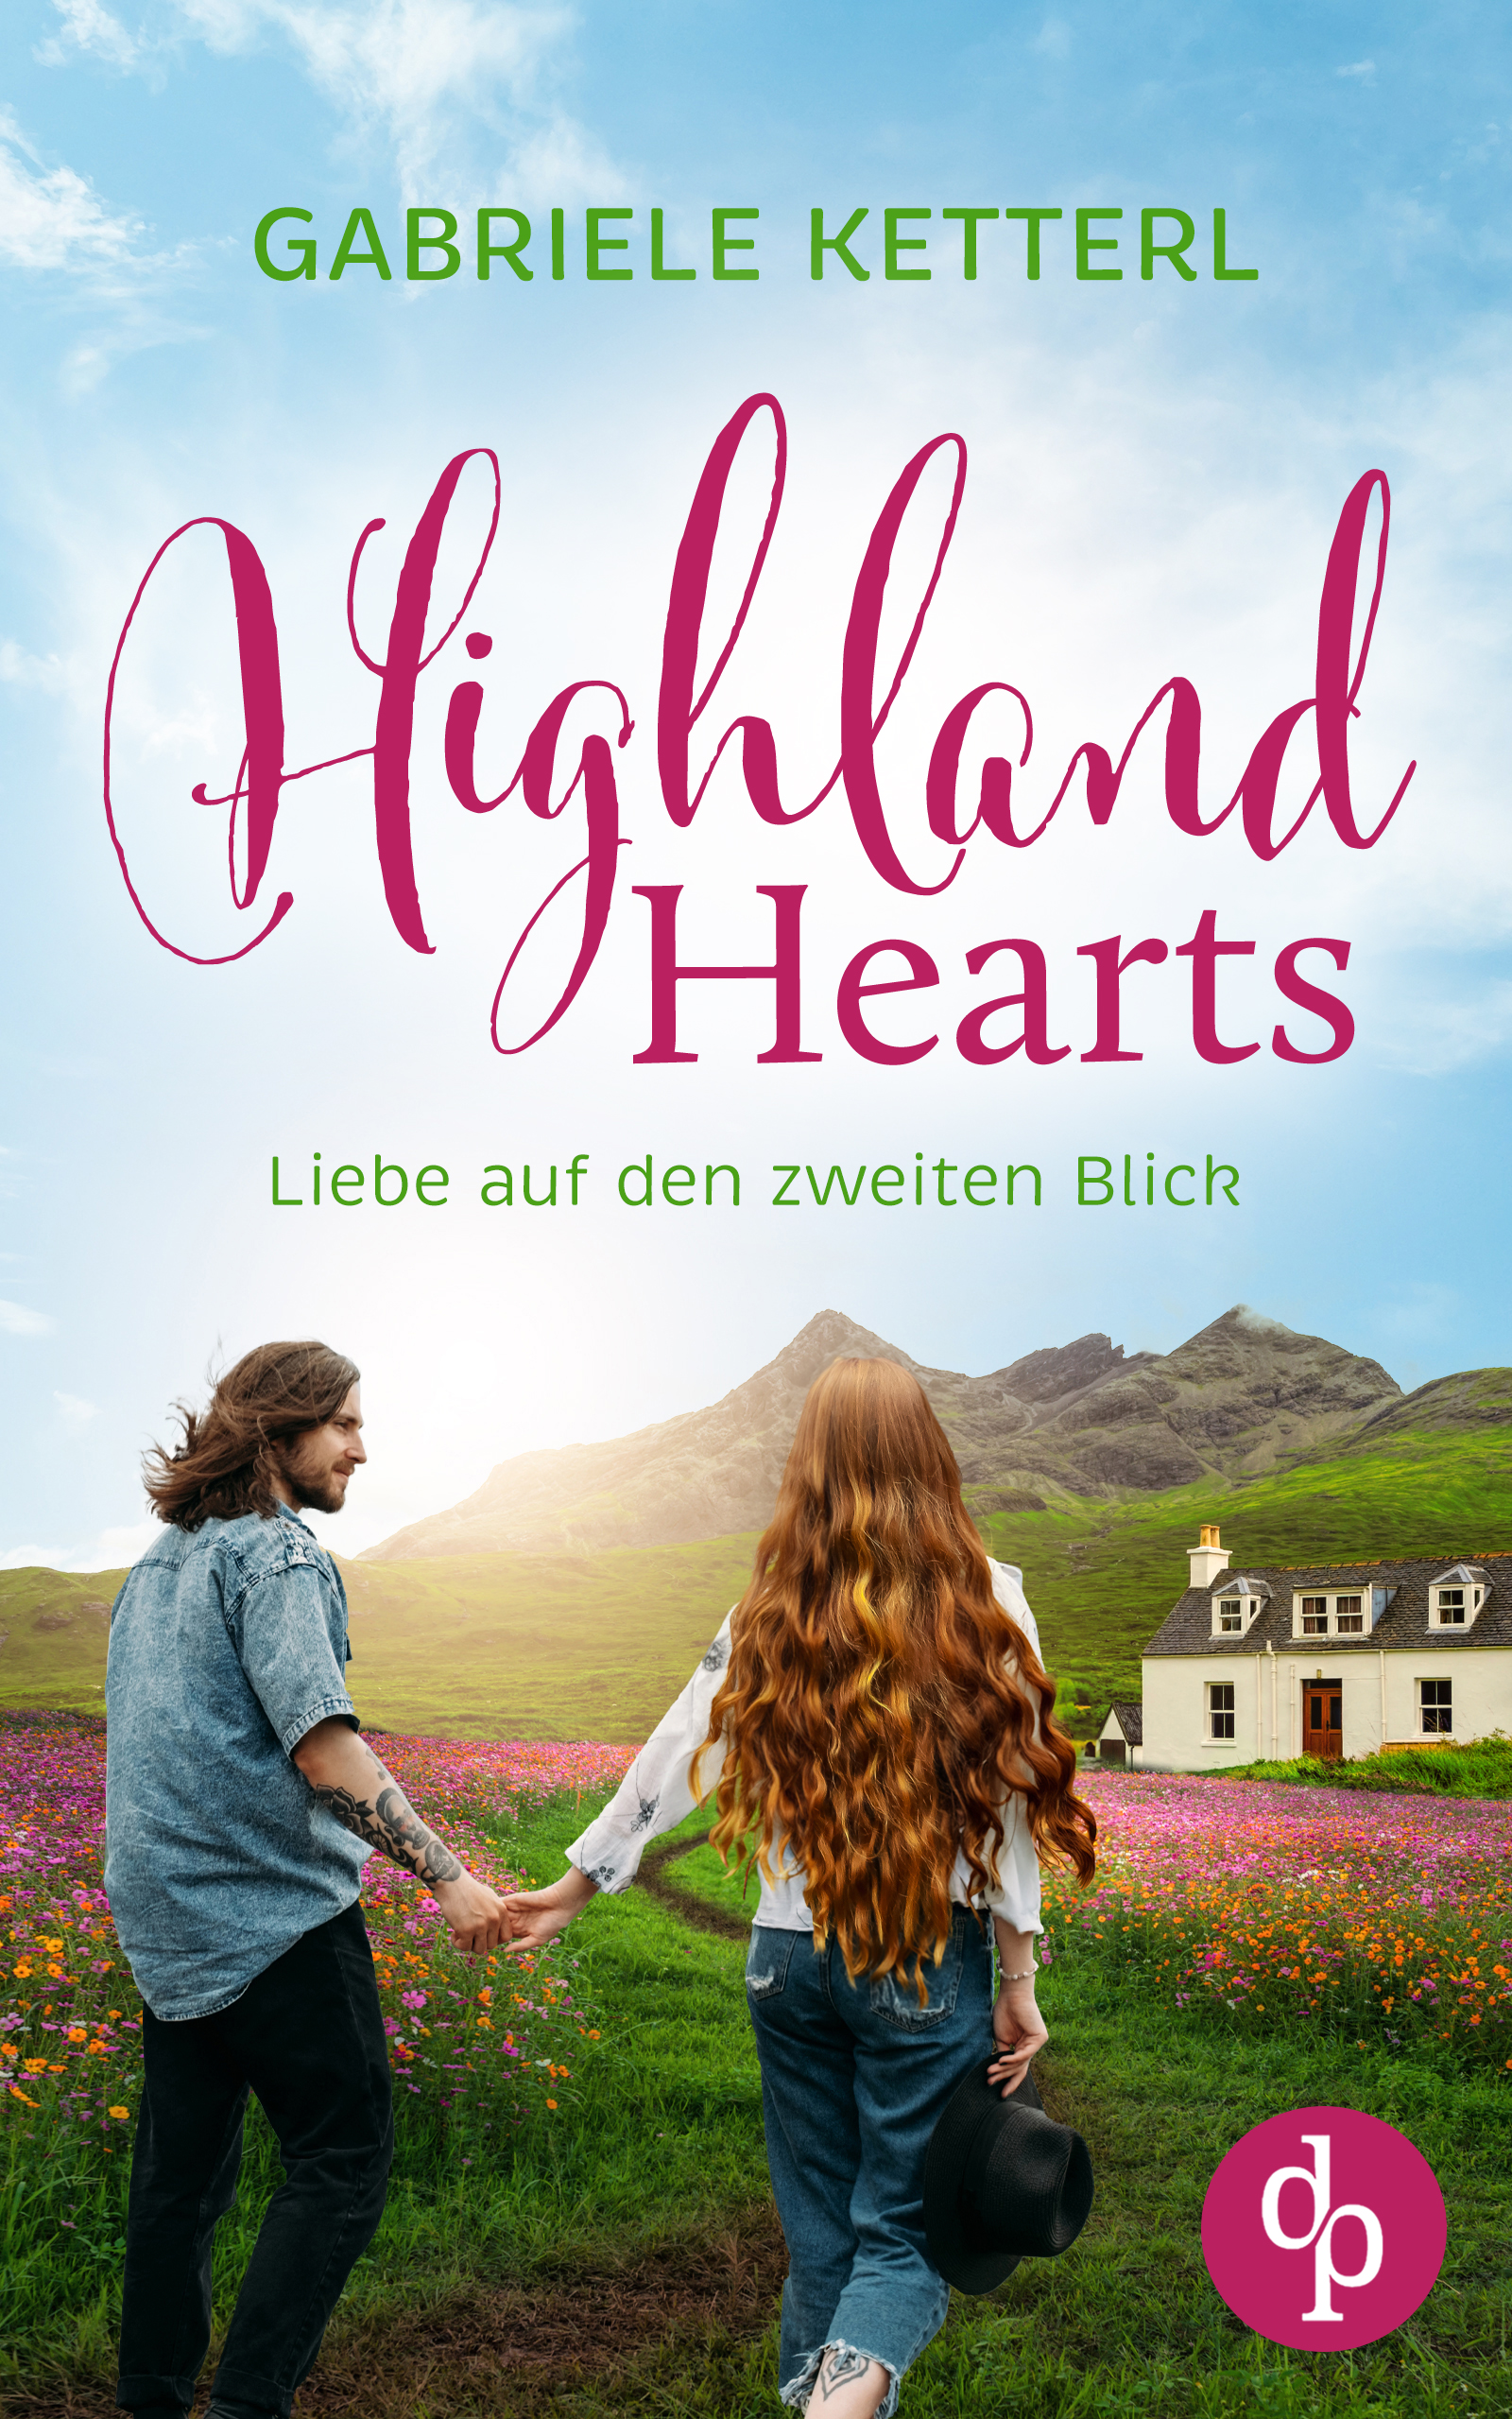 Highland Hearts